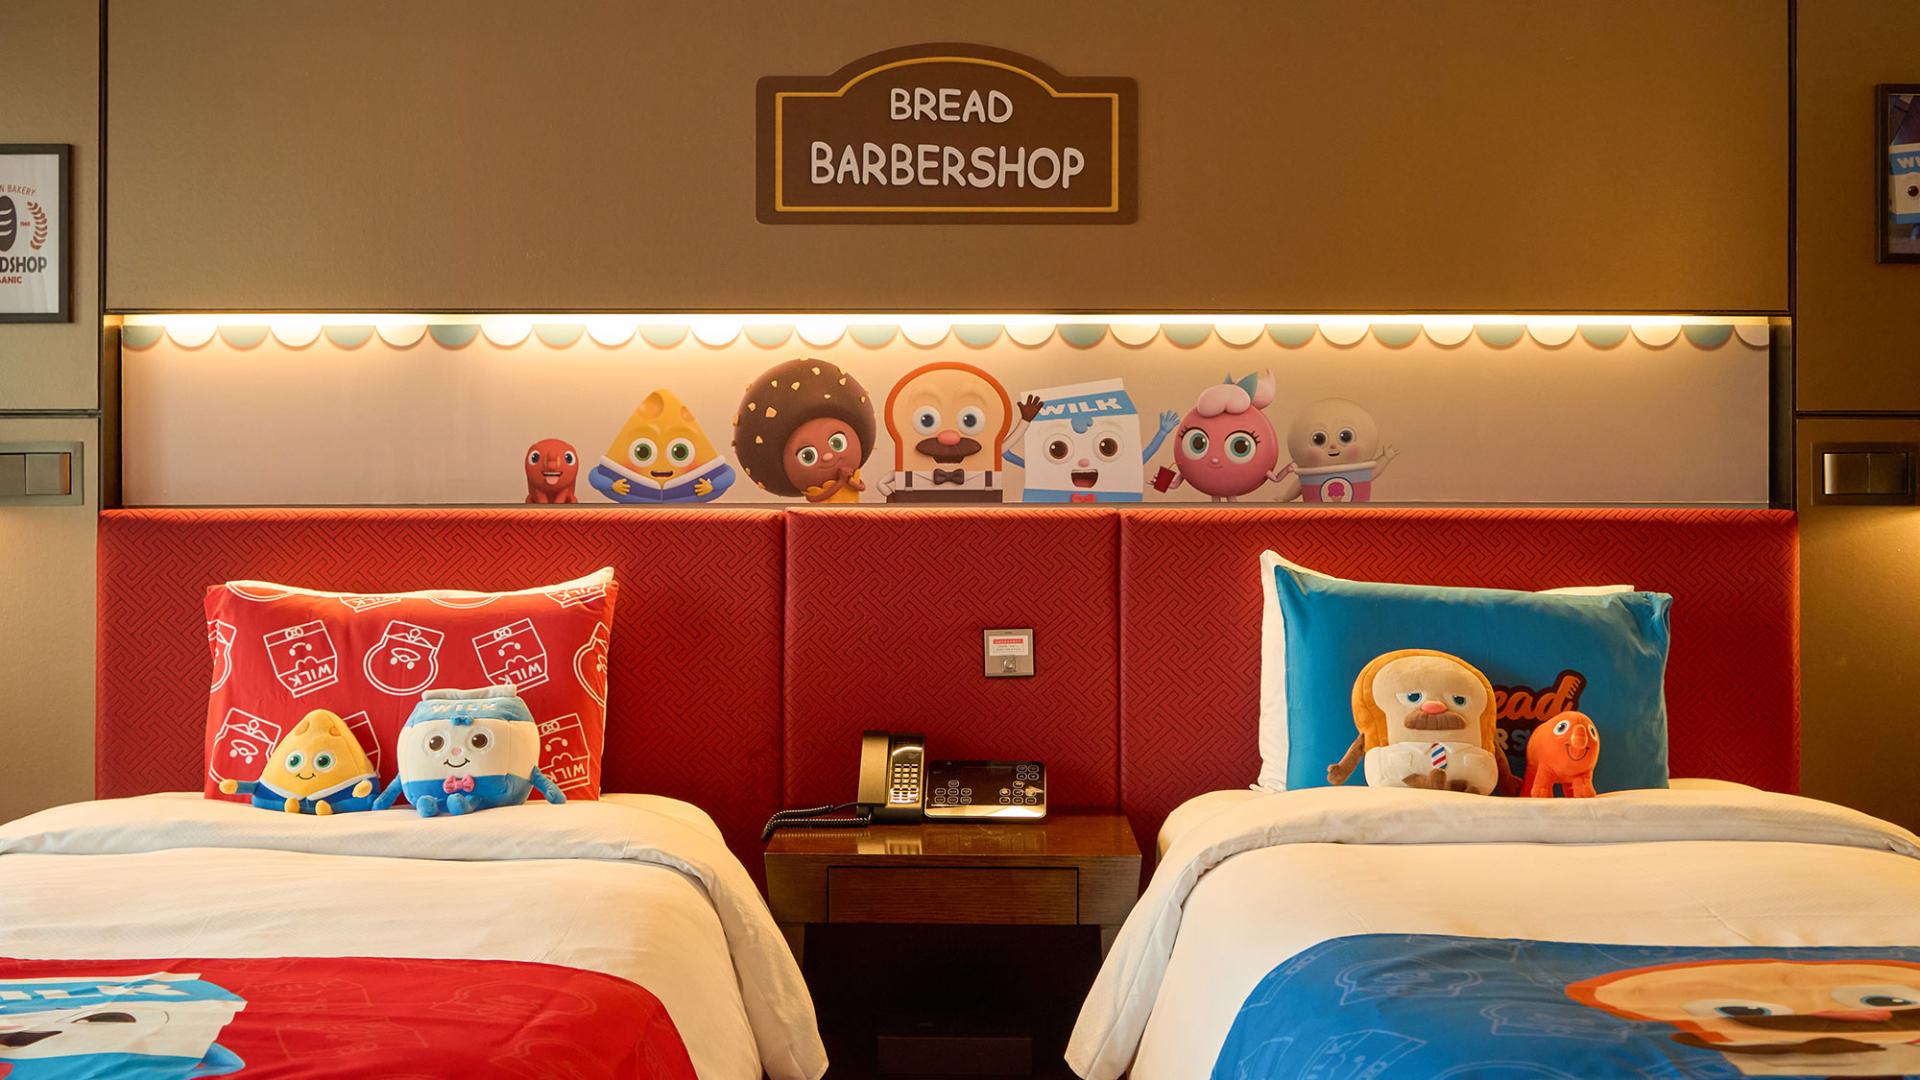 breadbarbershop, character room